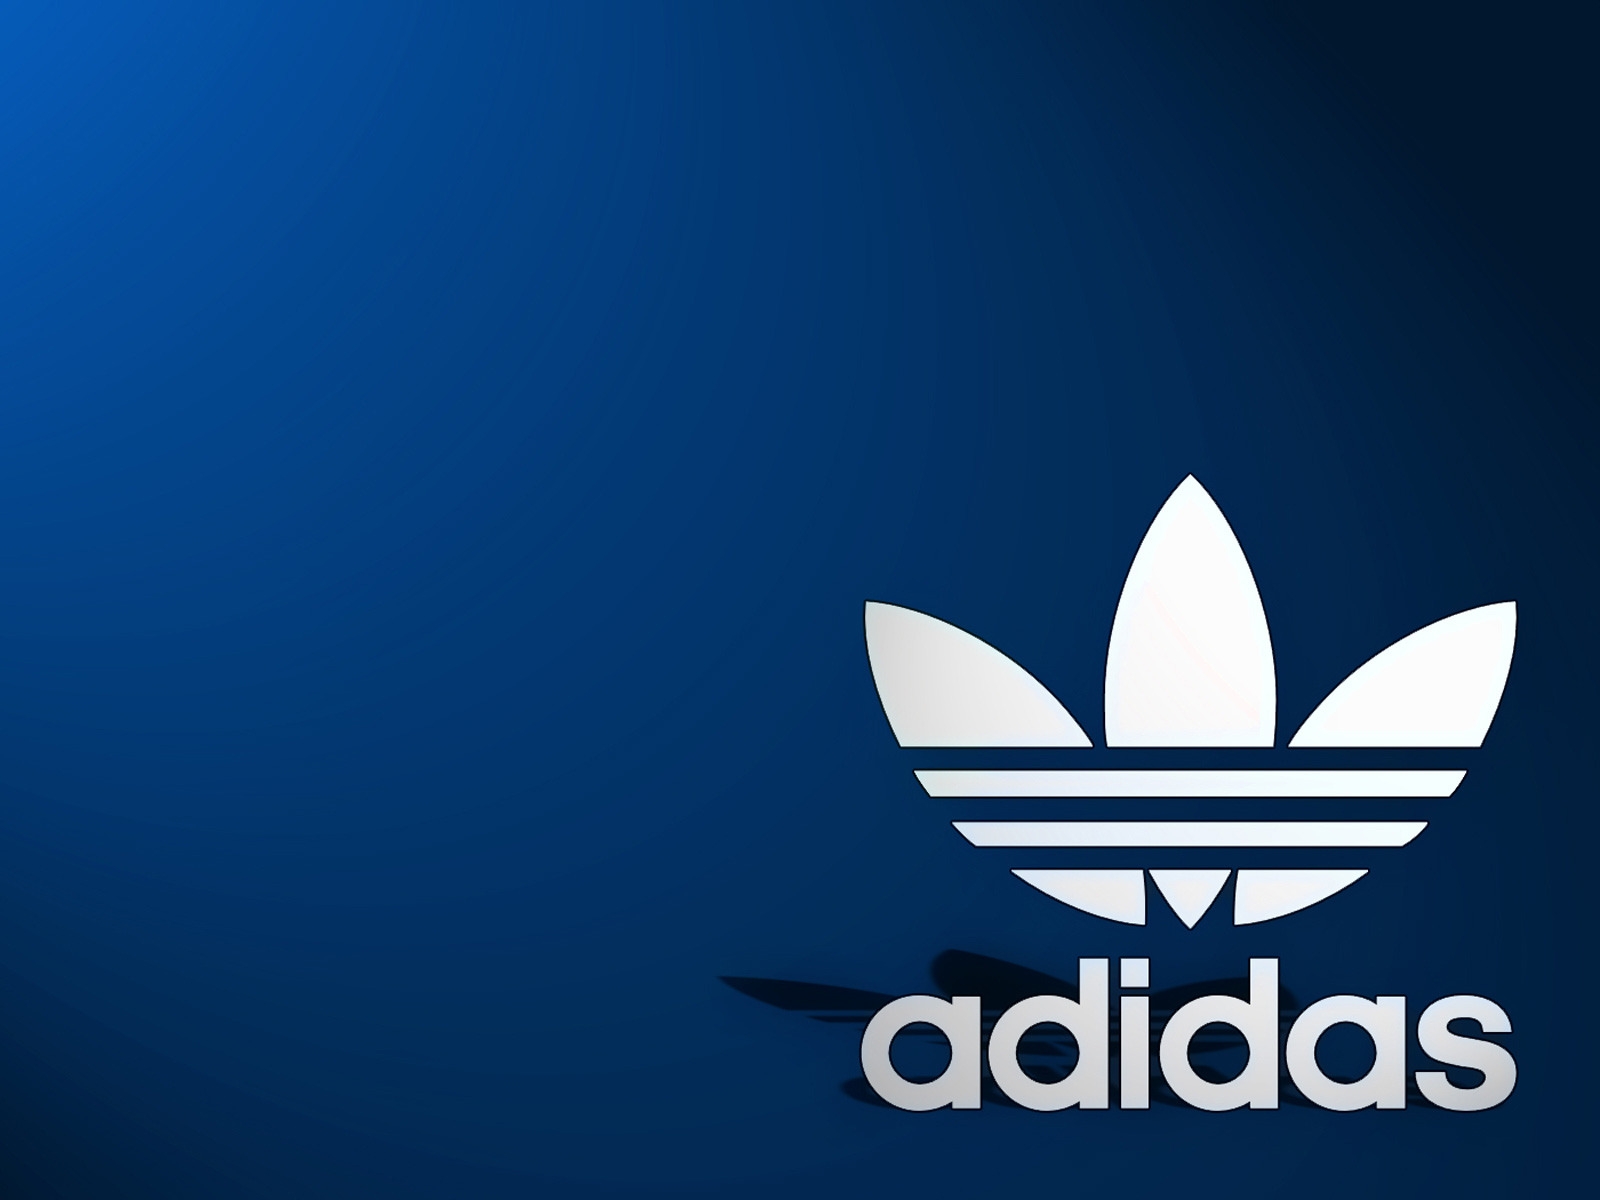 Adidas Logo Blue Background for 1600 x 1200 resolution